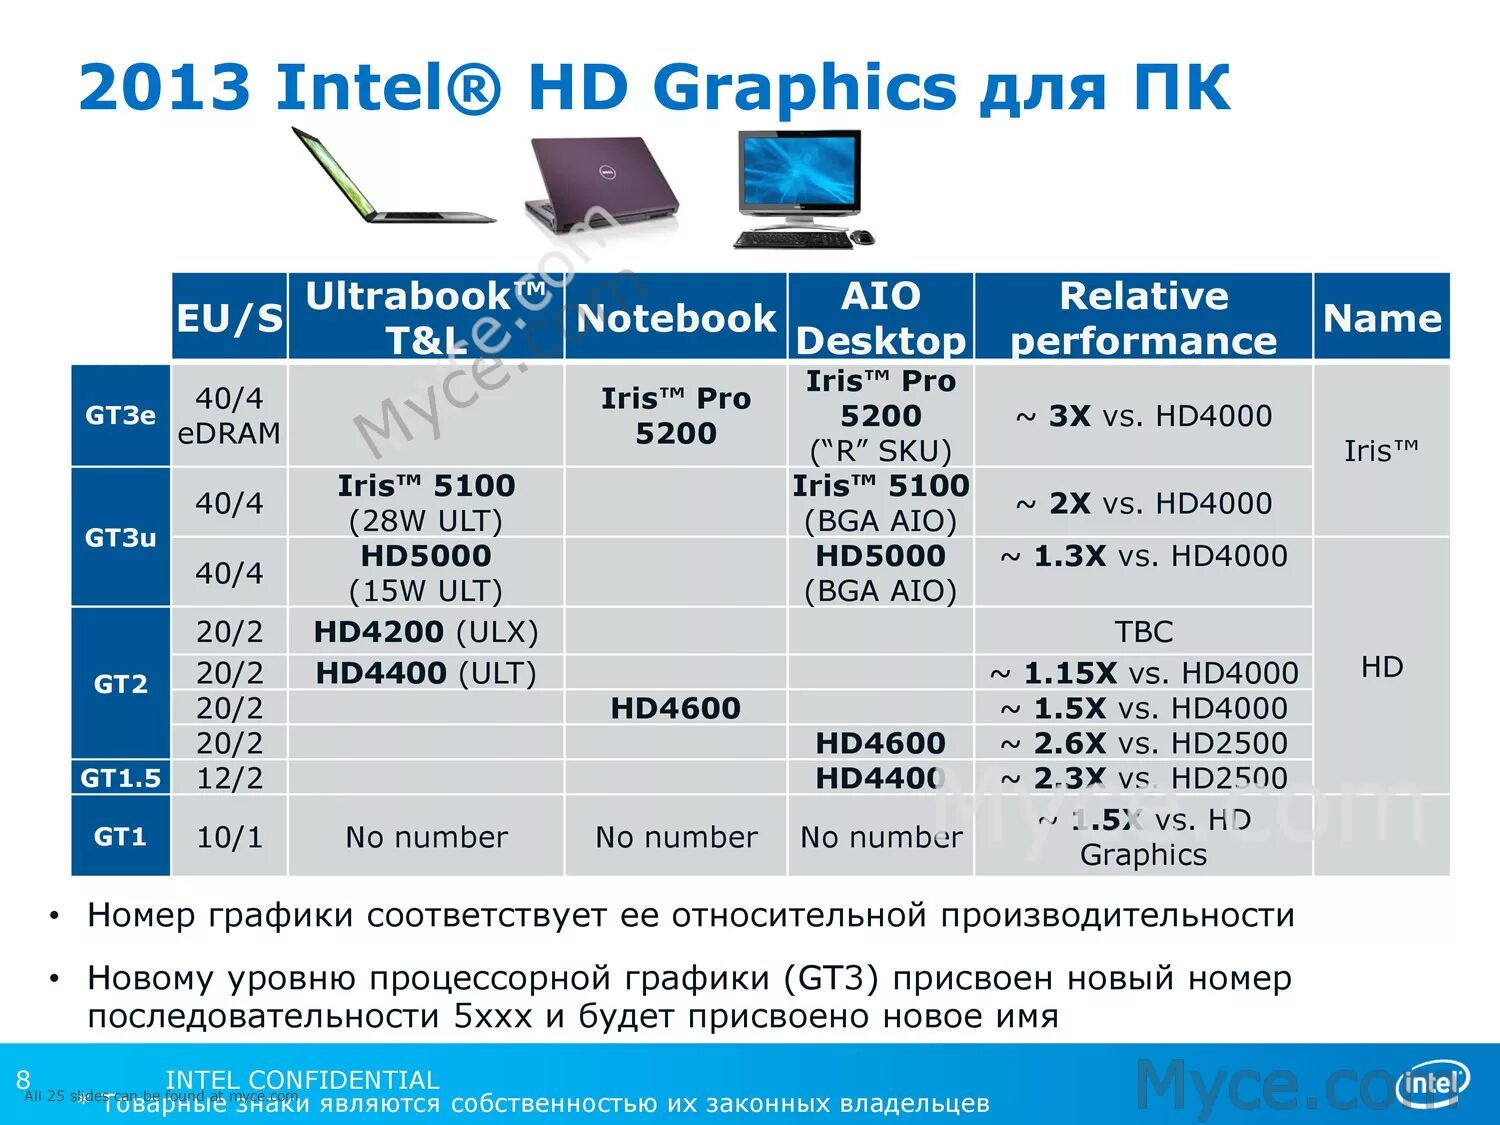 Intel mobile graphic